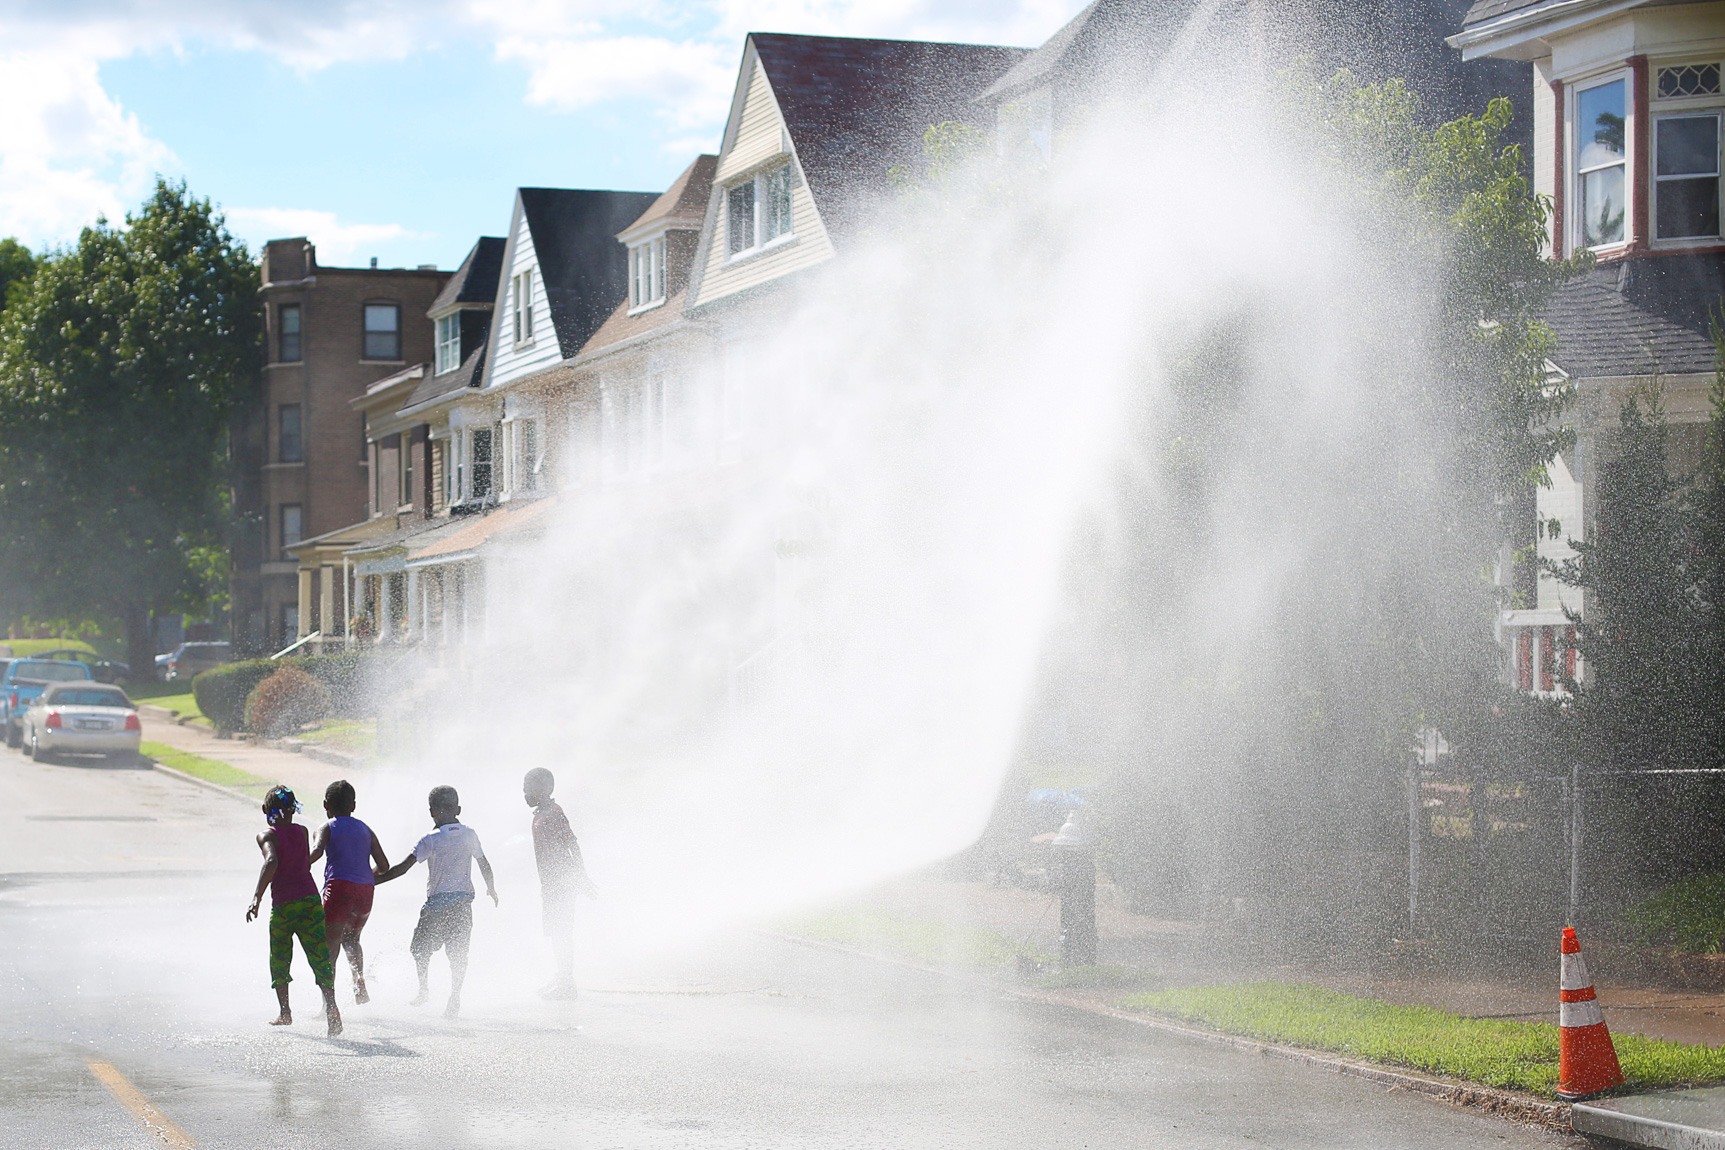 Children run through a large misty sprinkler in the street.